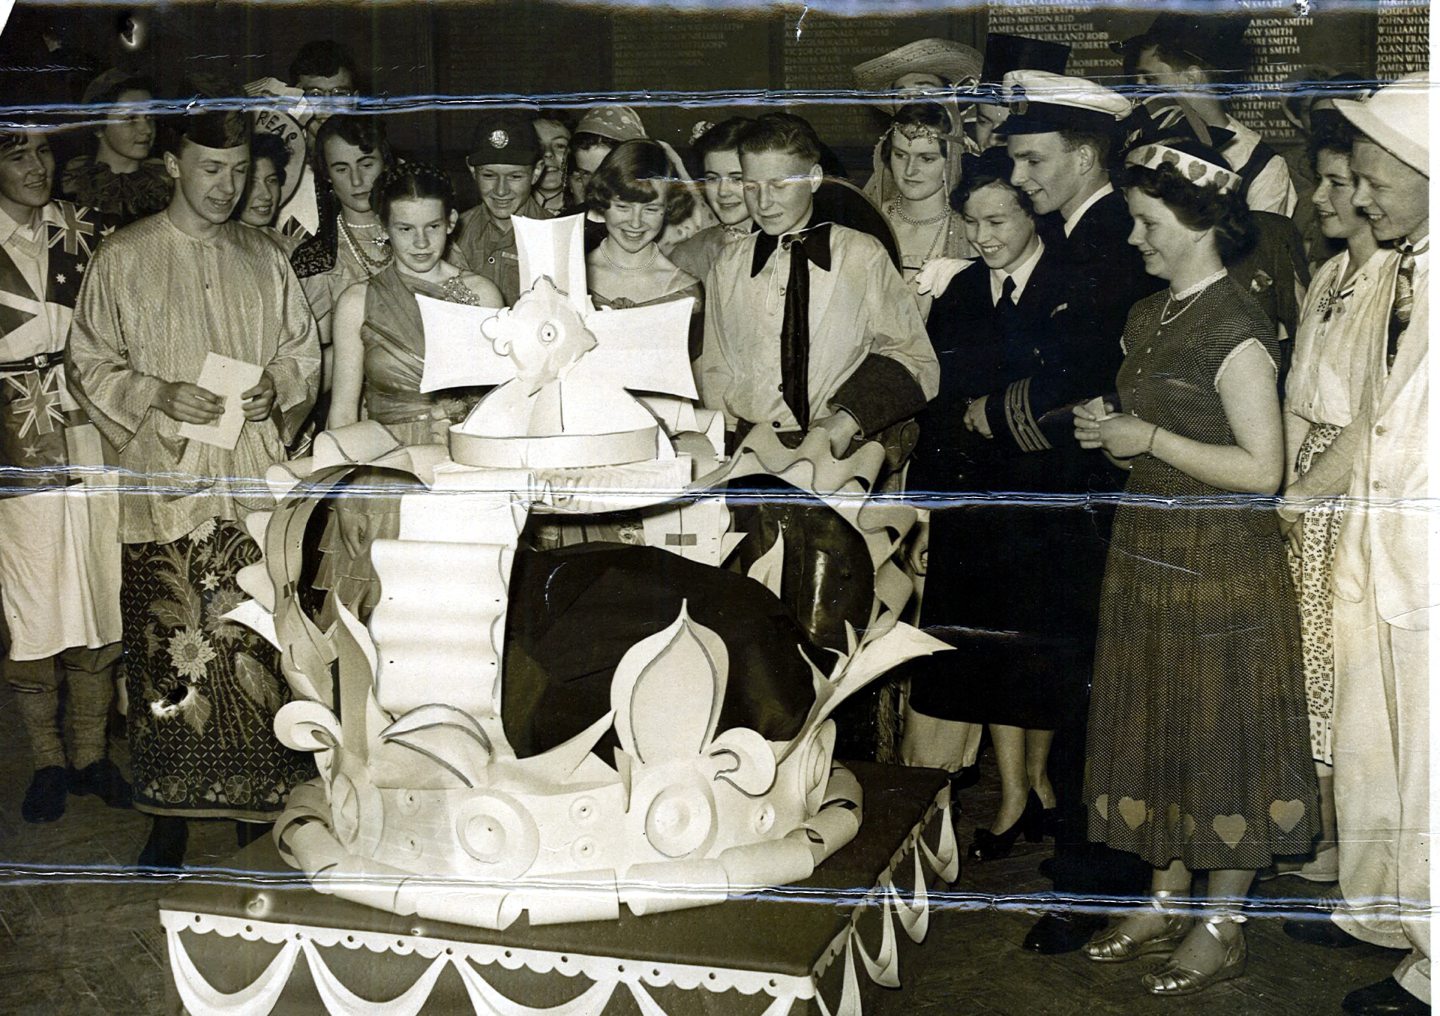 A fancy dress party at Aberdeen Grammar School on 6th June 1953.